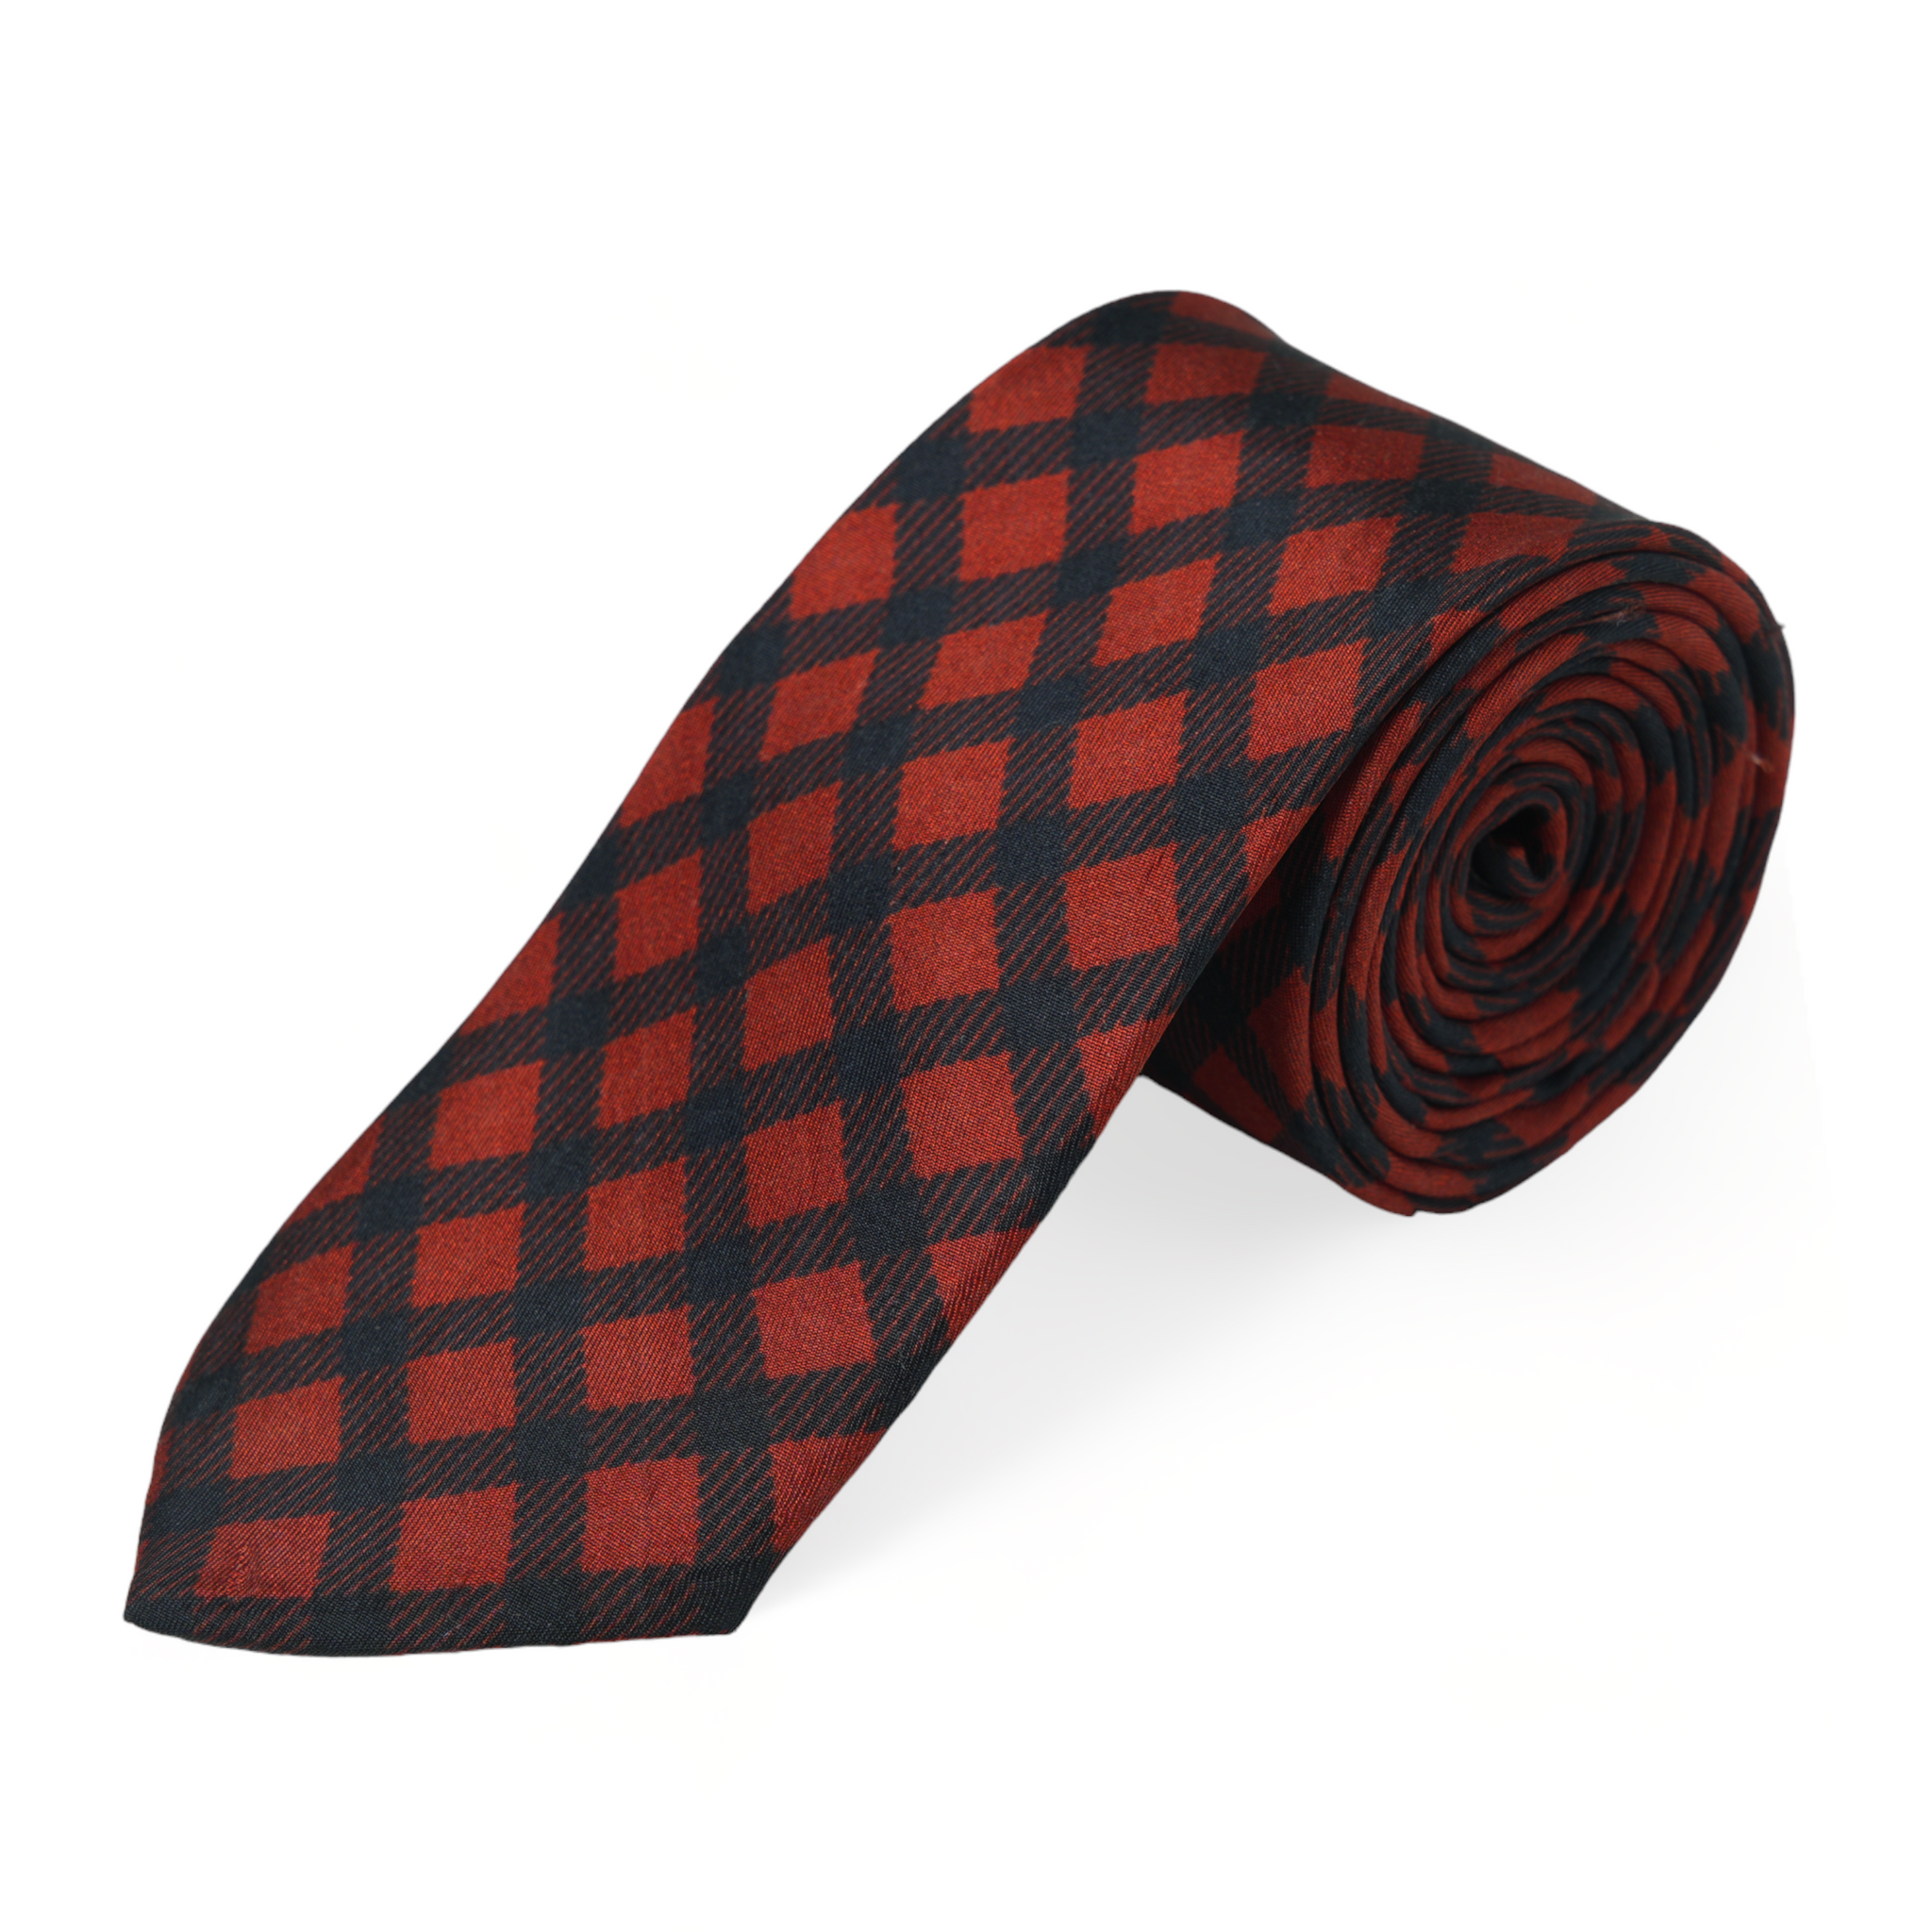 Chokore Red & Black Tartan tie - Plaids line